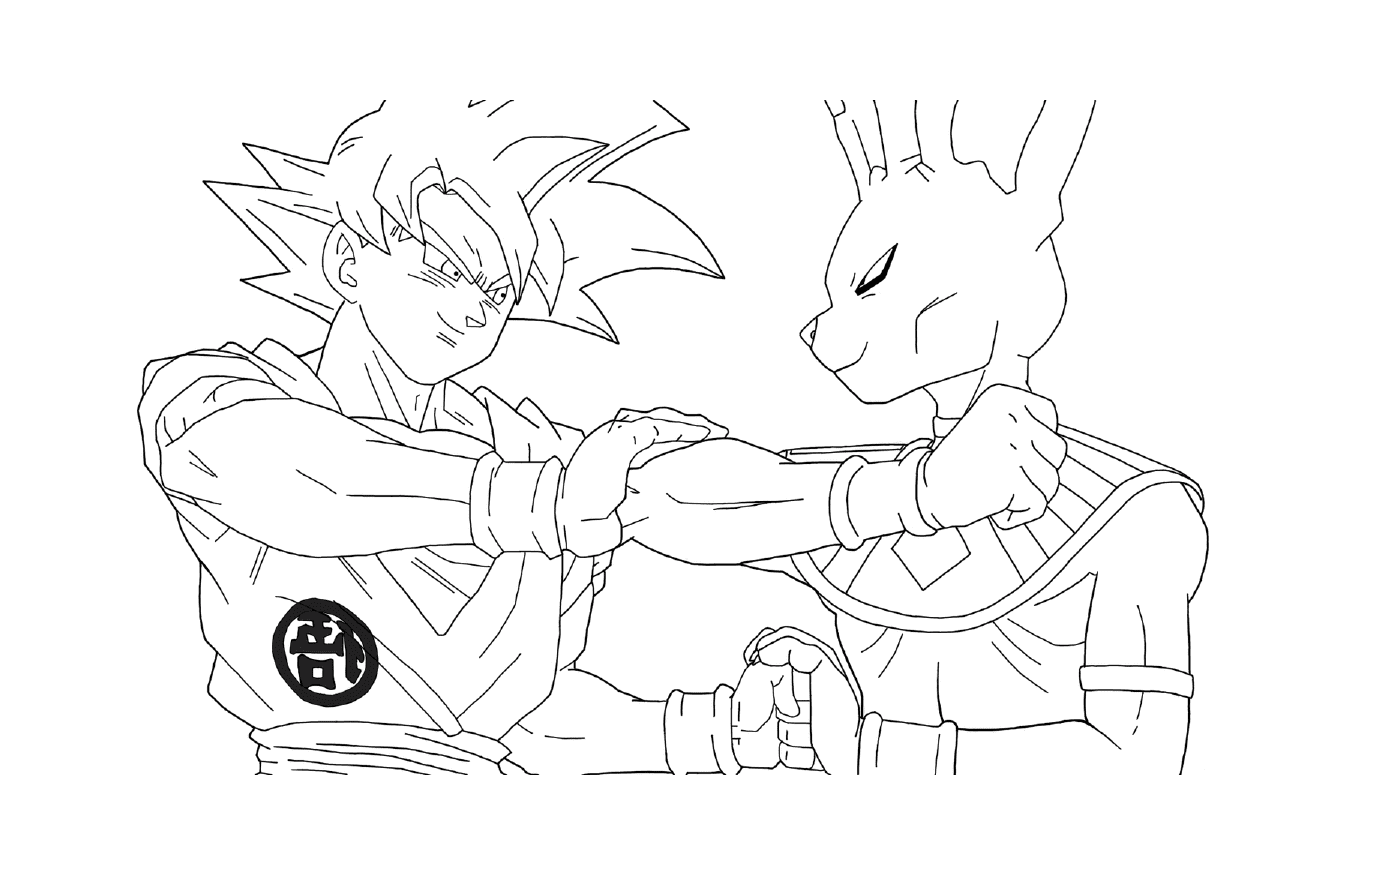  Beerus vs Goku Super Saiyan Gold from DBZ 